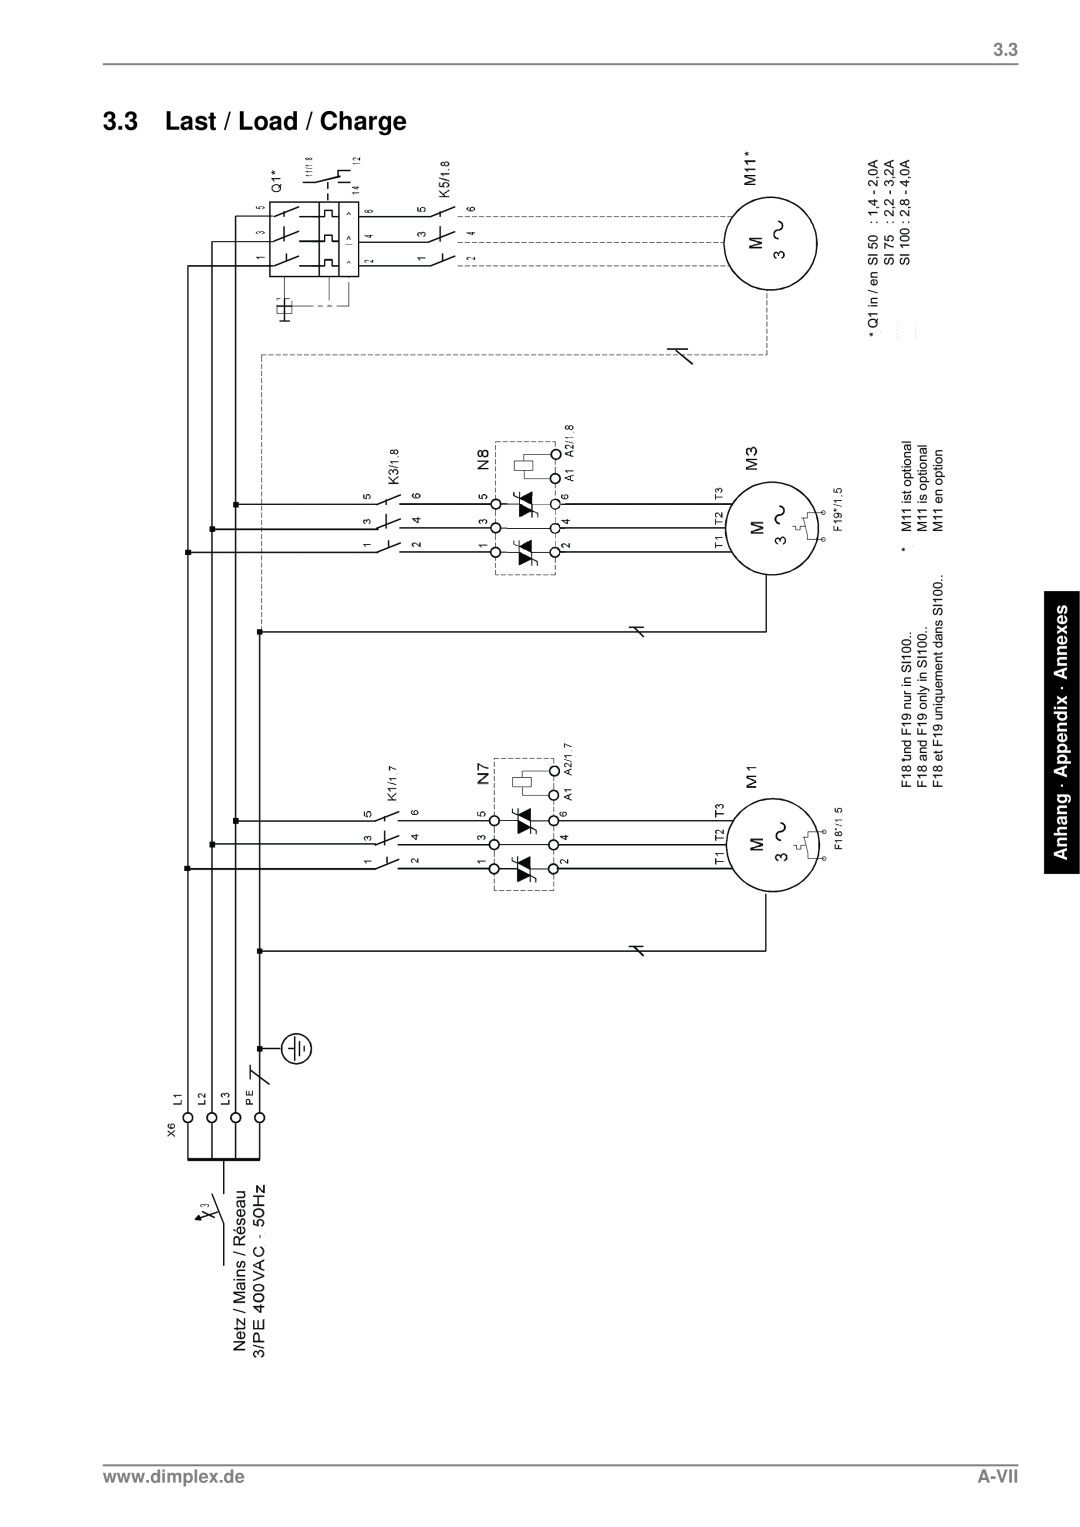 Dimplex SI 75ZSR manual 3.3Last / Load / Charge, · Appendix · Annexes, Anhang, A-Vii, 0LVWRSWLRQDO, 0LVRSWLRQDO 